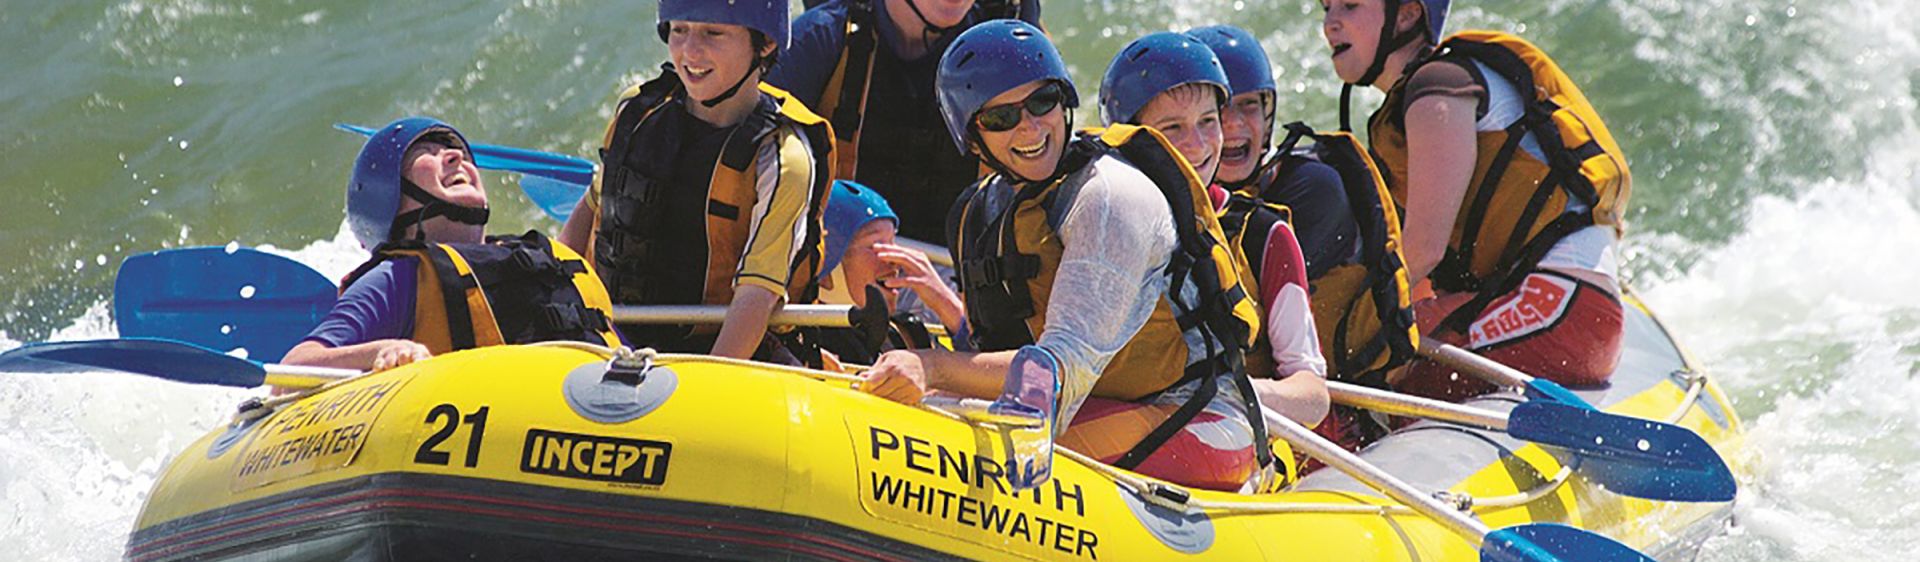 Whitewater rafting at Penrith Whitewater Stadium